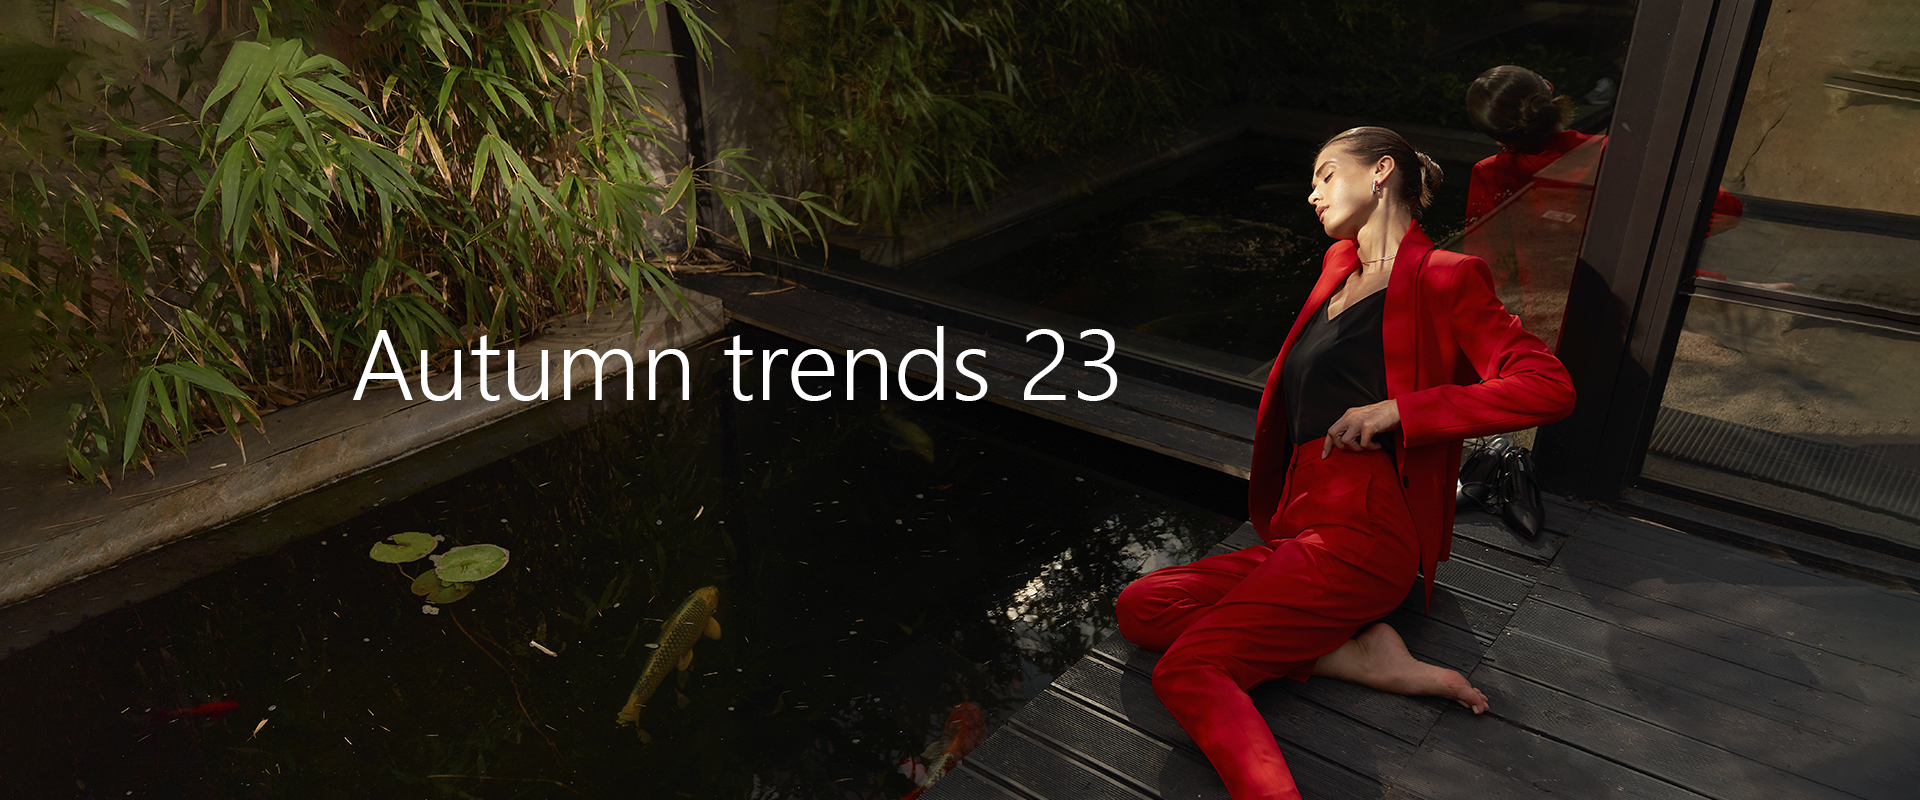 Autumn trends 23 1 – блог Natali Bolgar - изображение